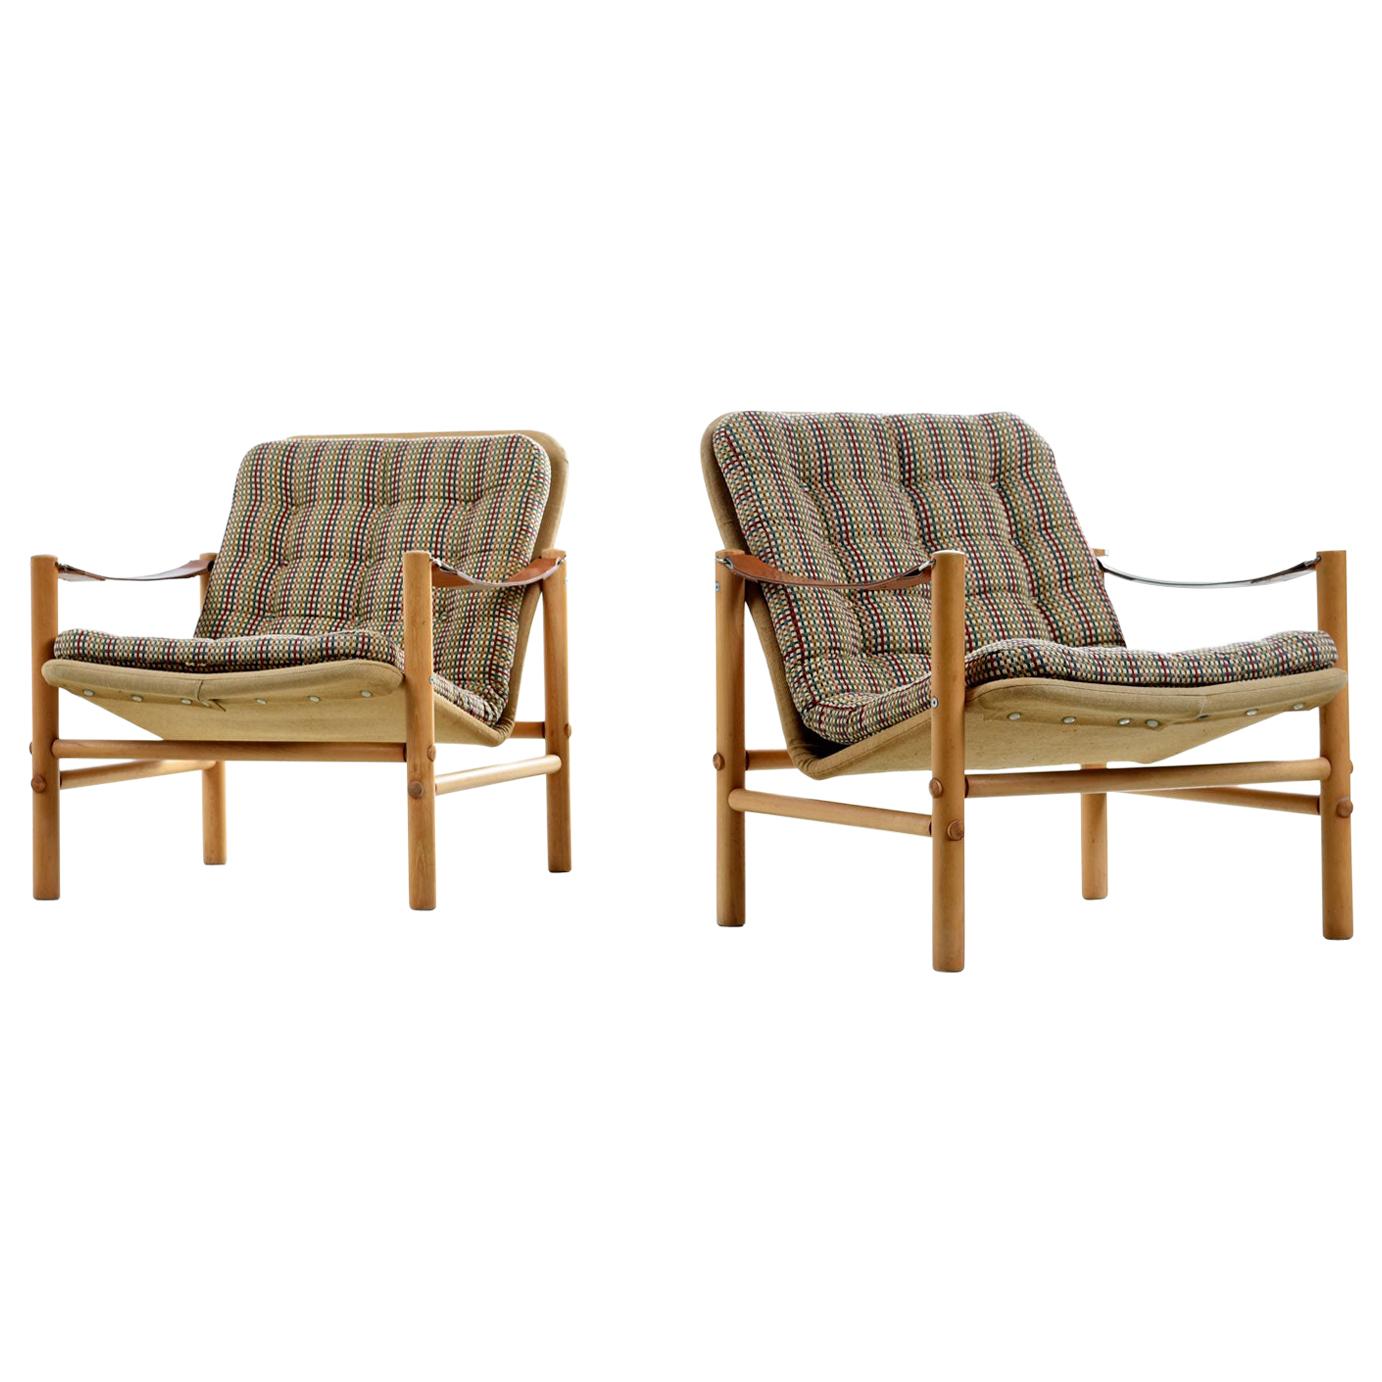 Original Solid Beechwood DUX Safari Junker Chairs by Bror Boije Made in Sweden